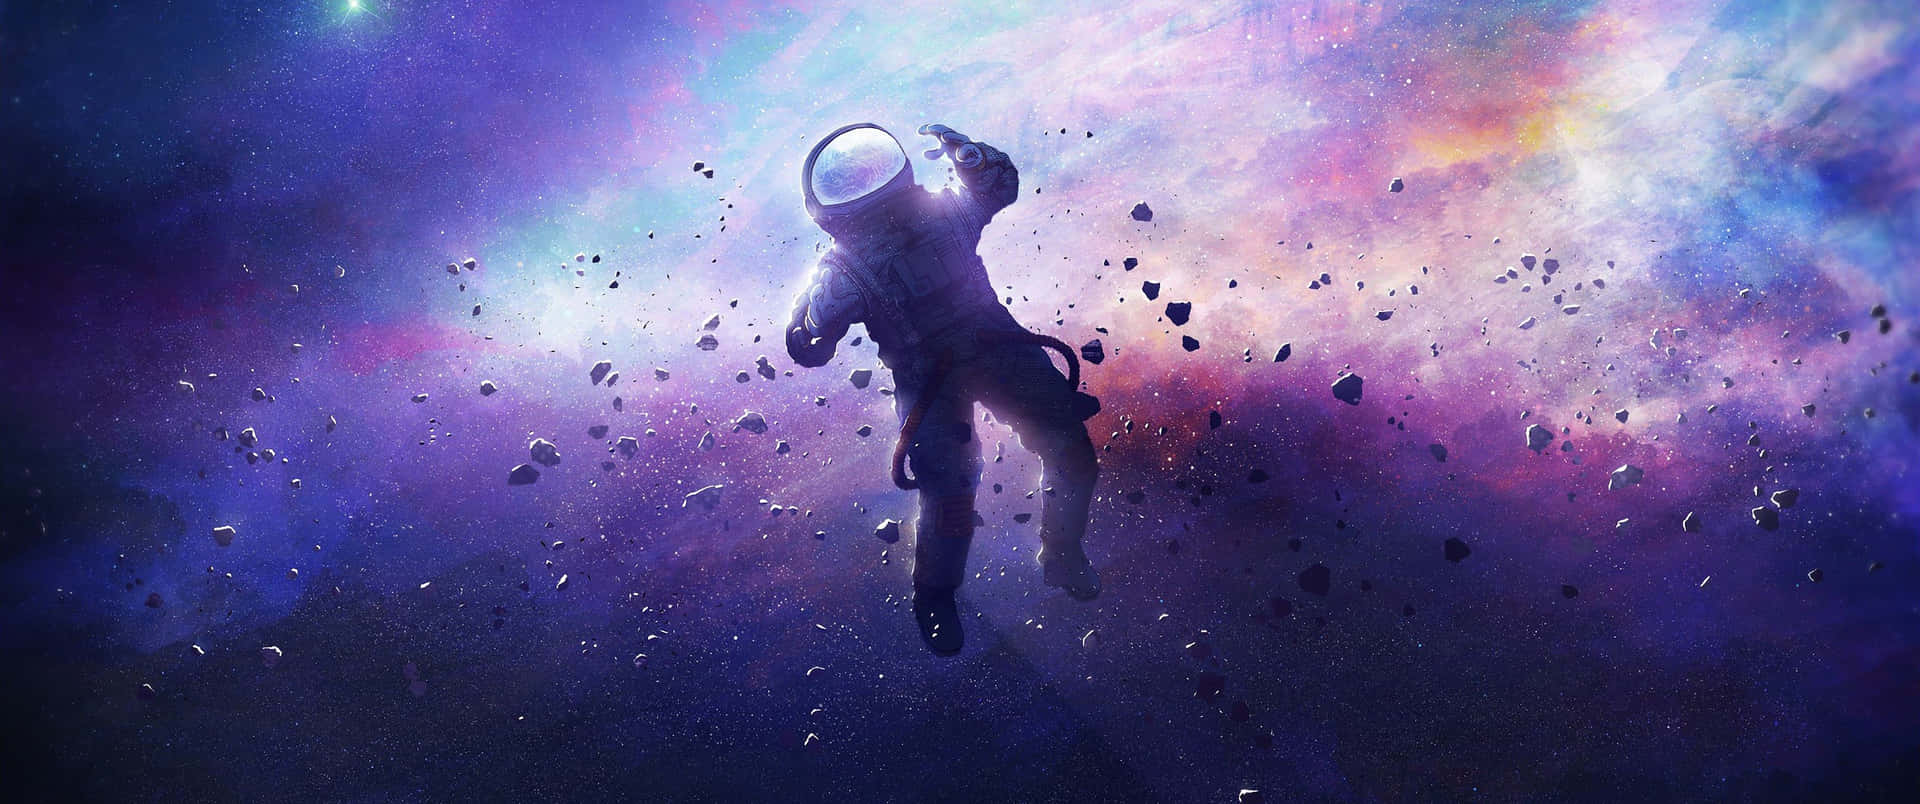 Ultra Wide 3440 X 1440 Astronaut Space Wallpaper